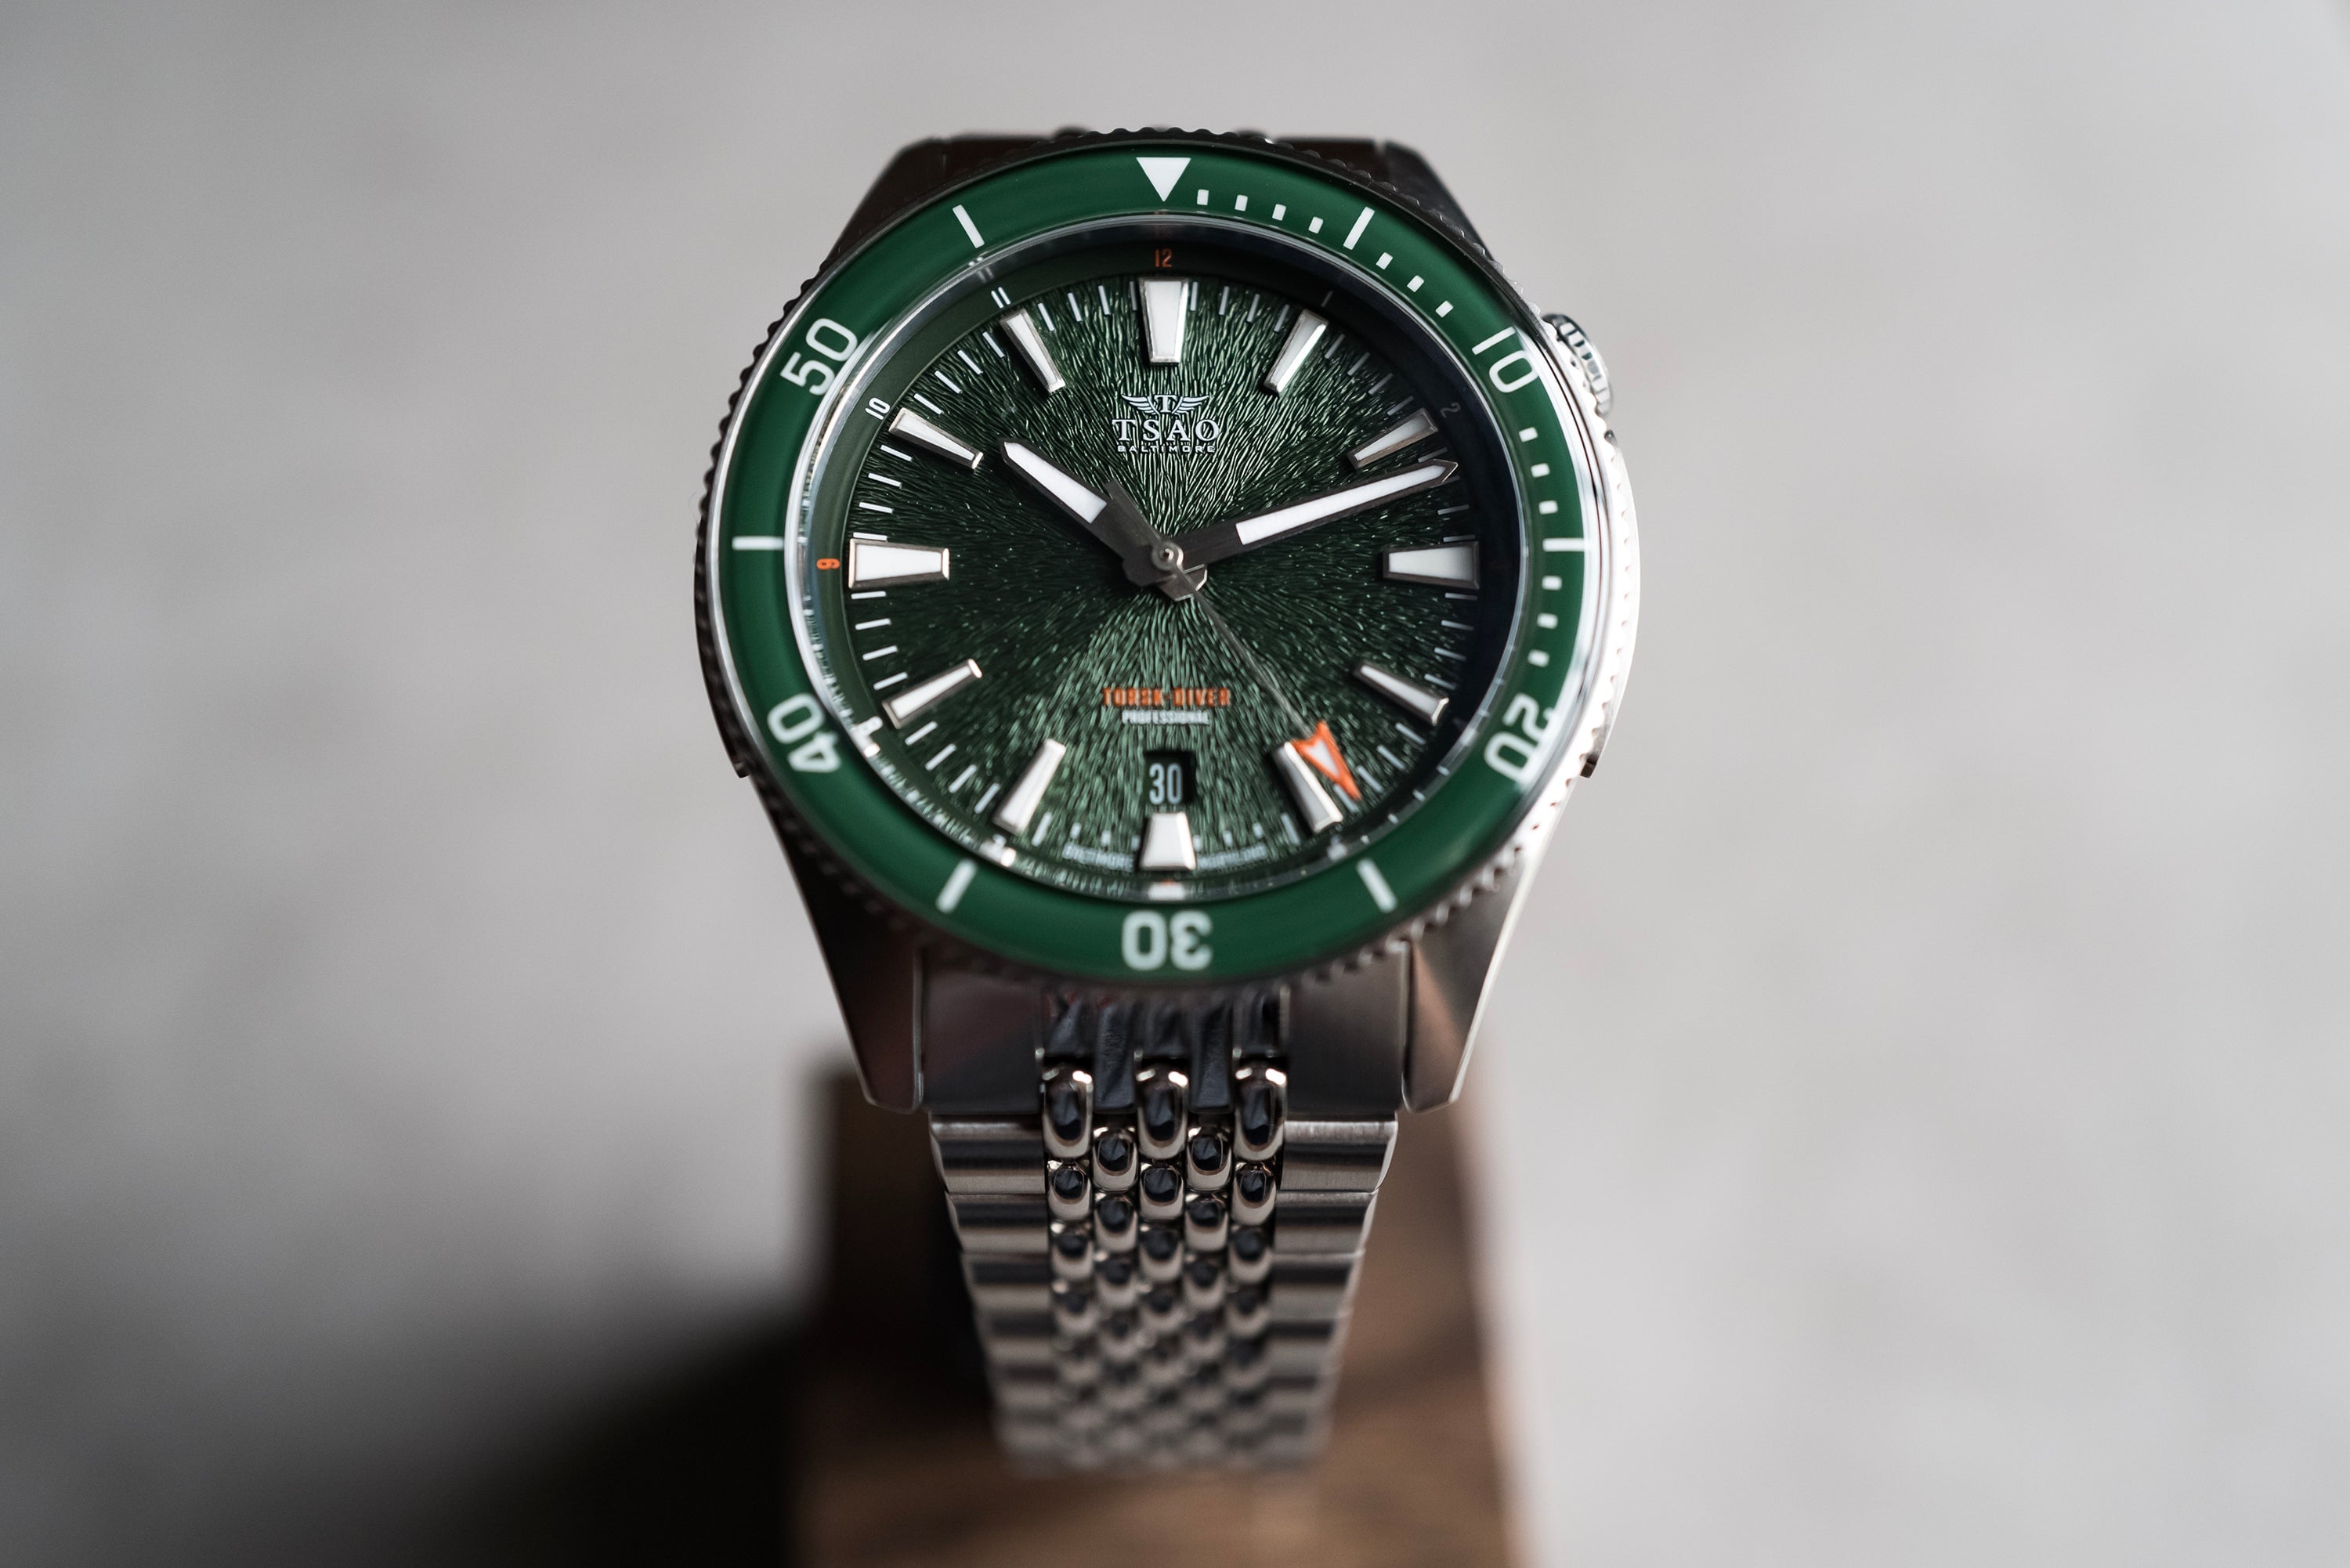 Steel Torsk-Diver Pro Emerald Green Tsao Baltimore 